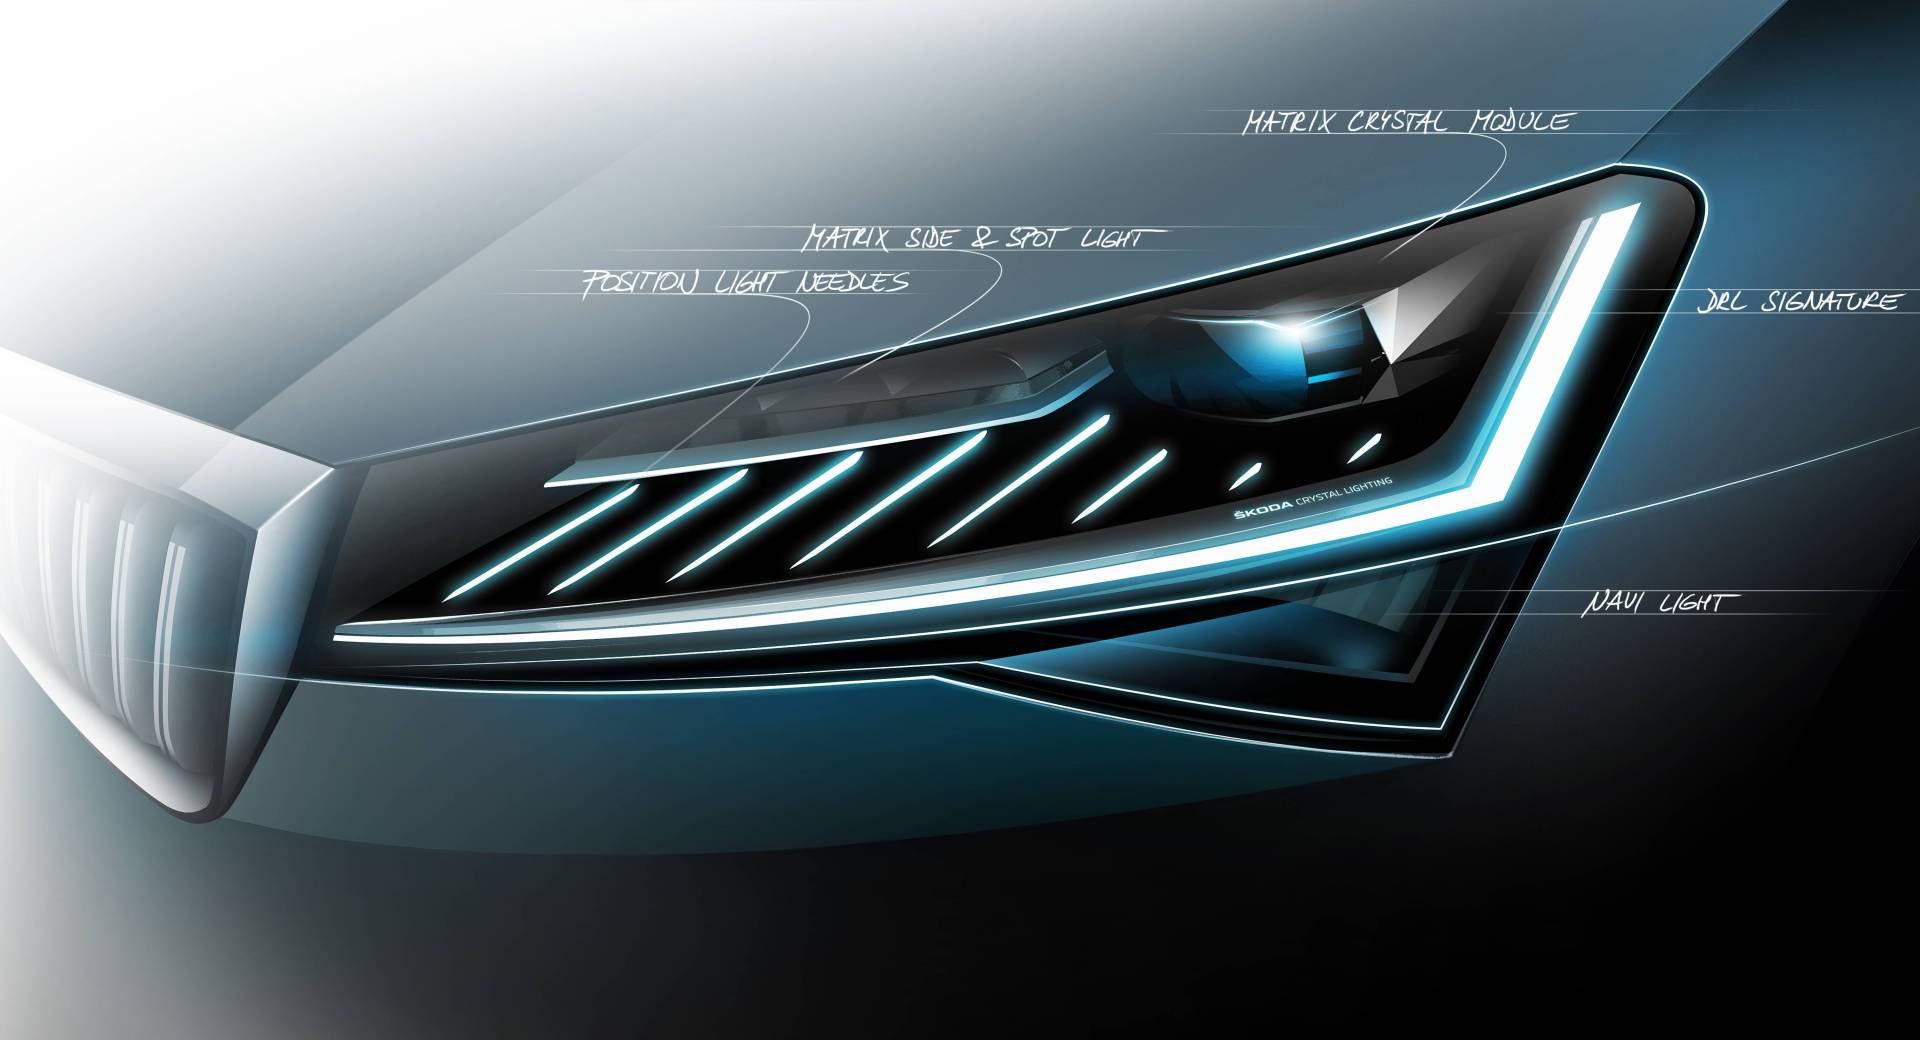 2020 Superb First Skoda With Full-LED Matrix Headlights, Dynamic Indicators |